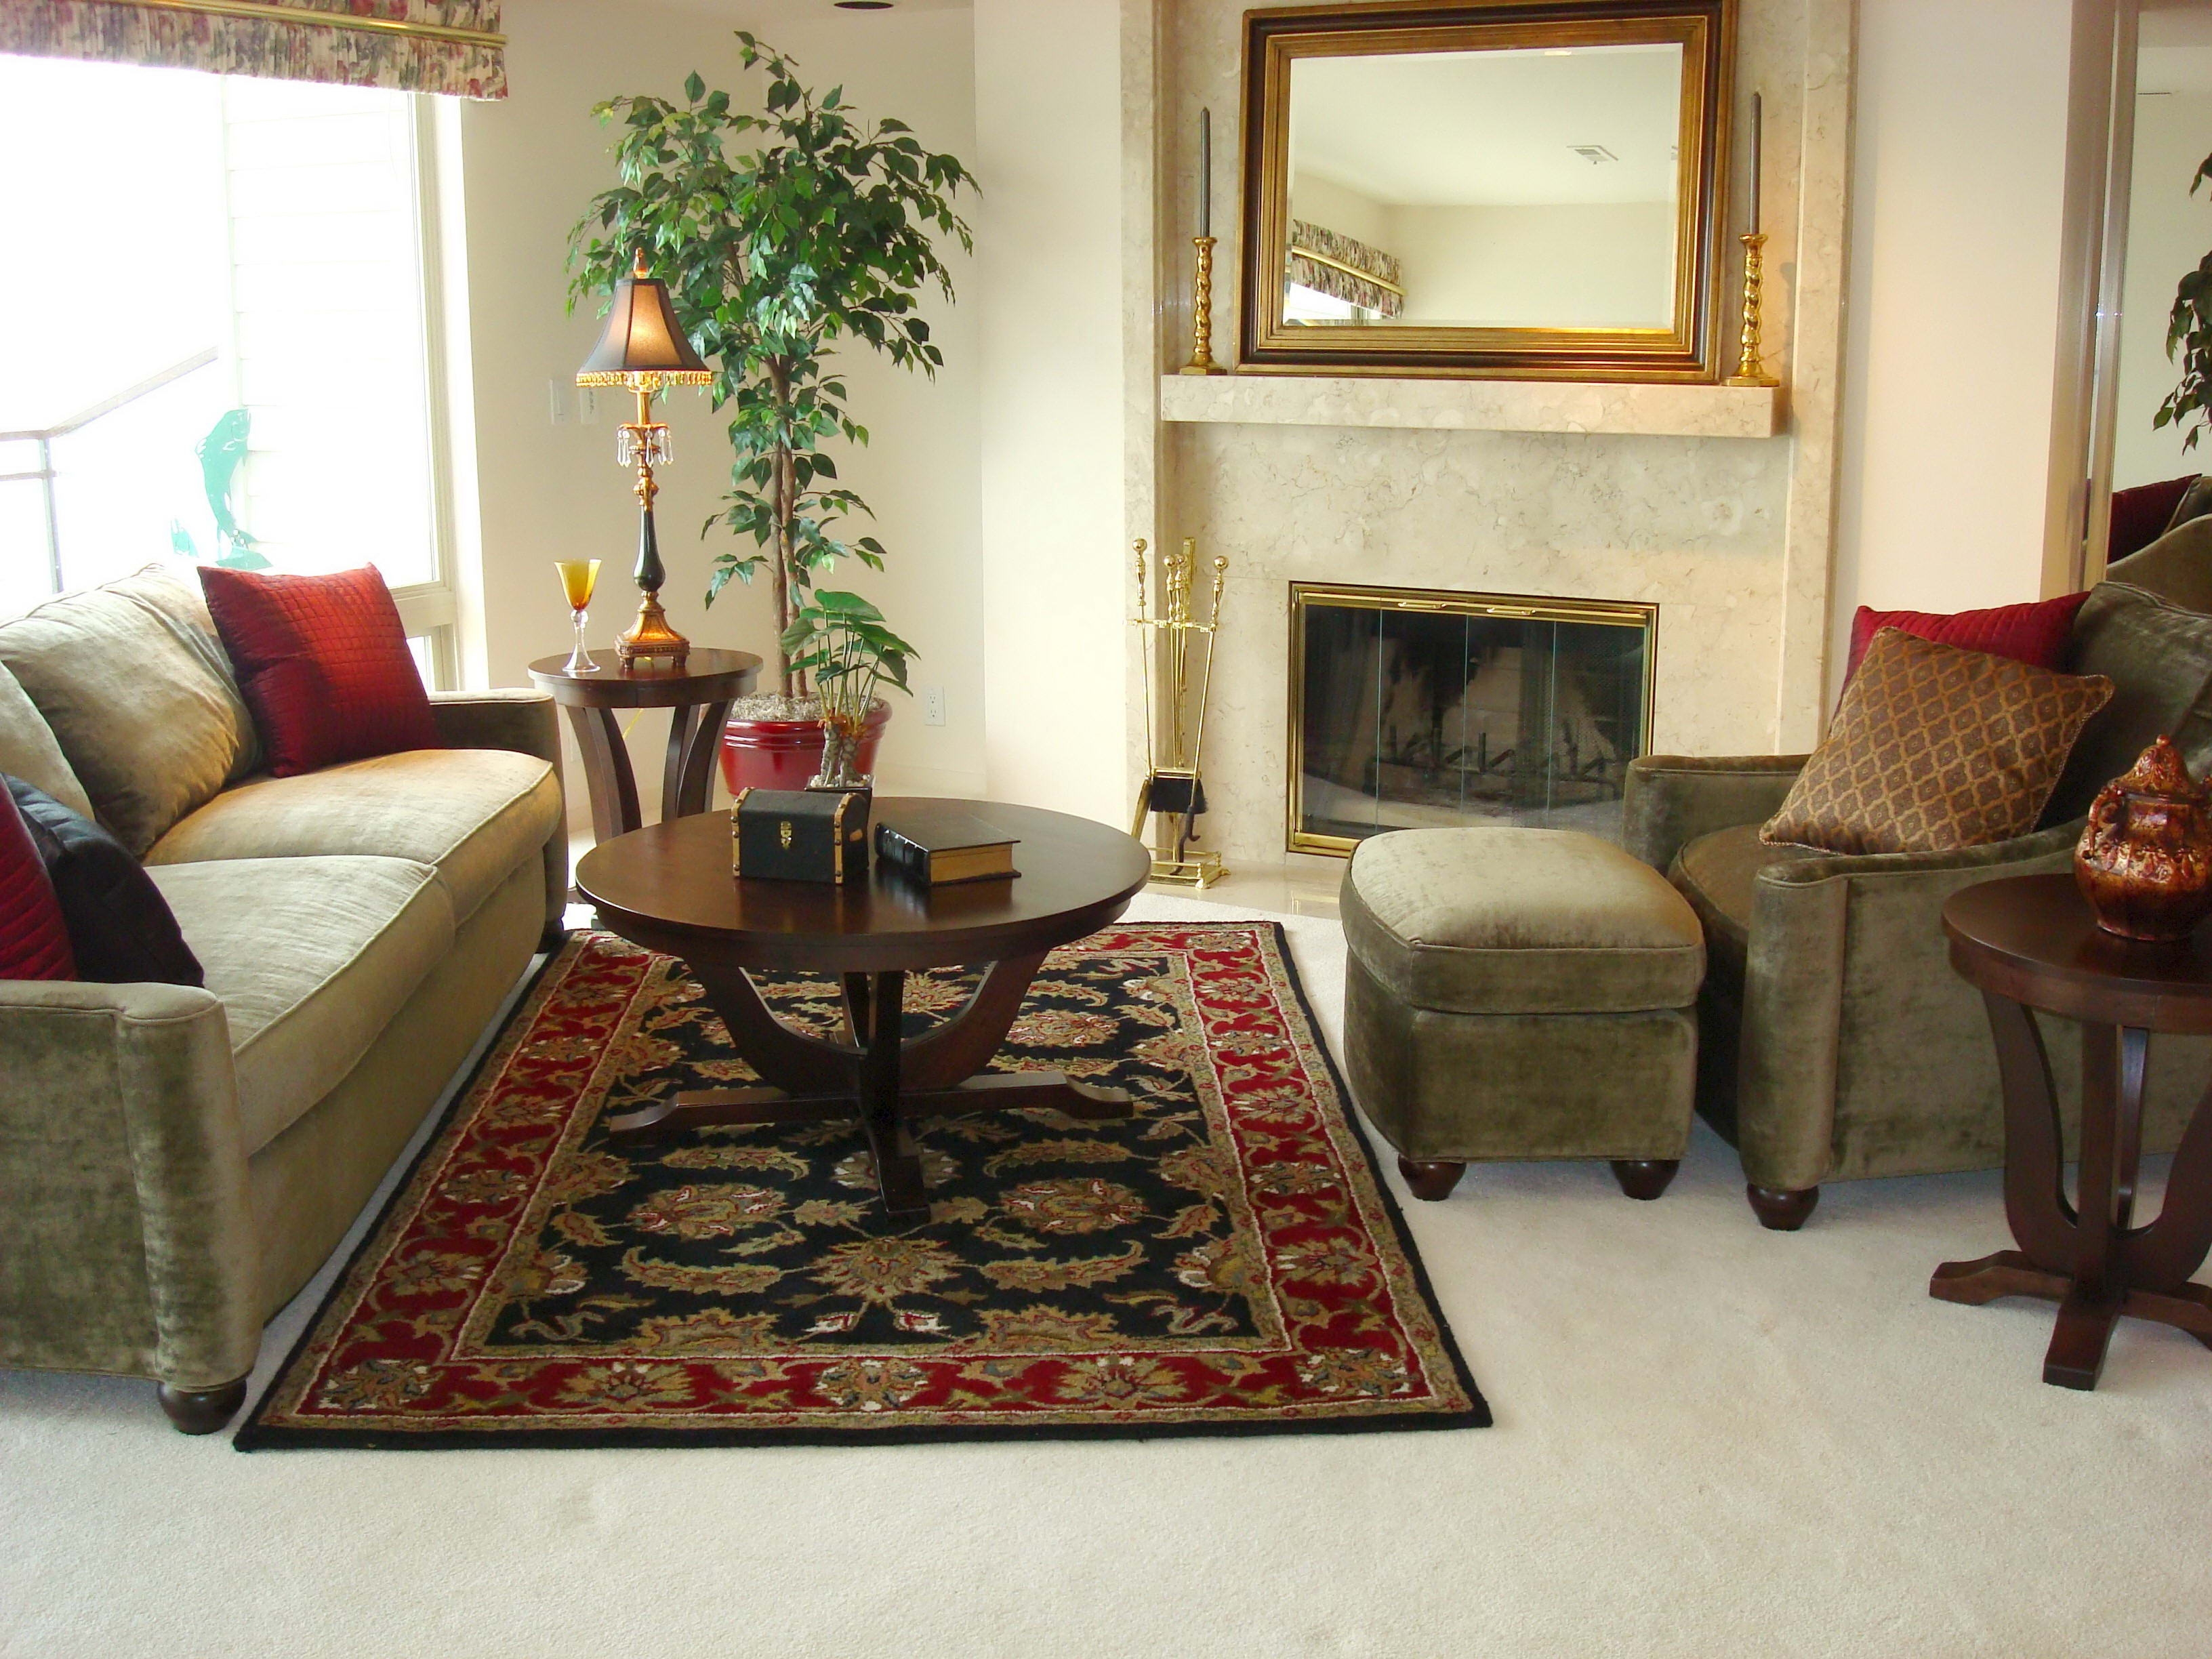 miscellanea, interior, miscellaneous, sofa, armchair, living room, fireplace, example